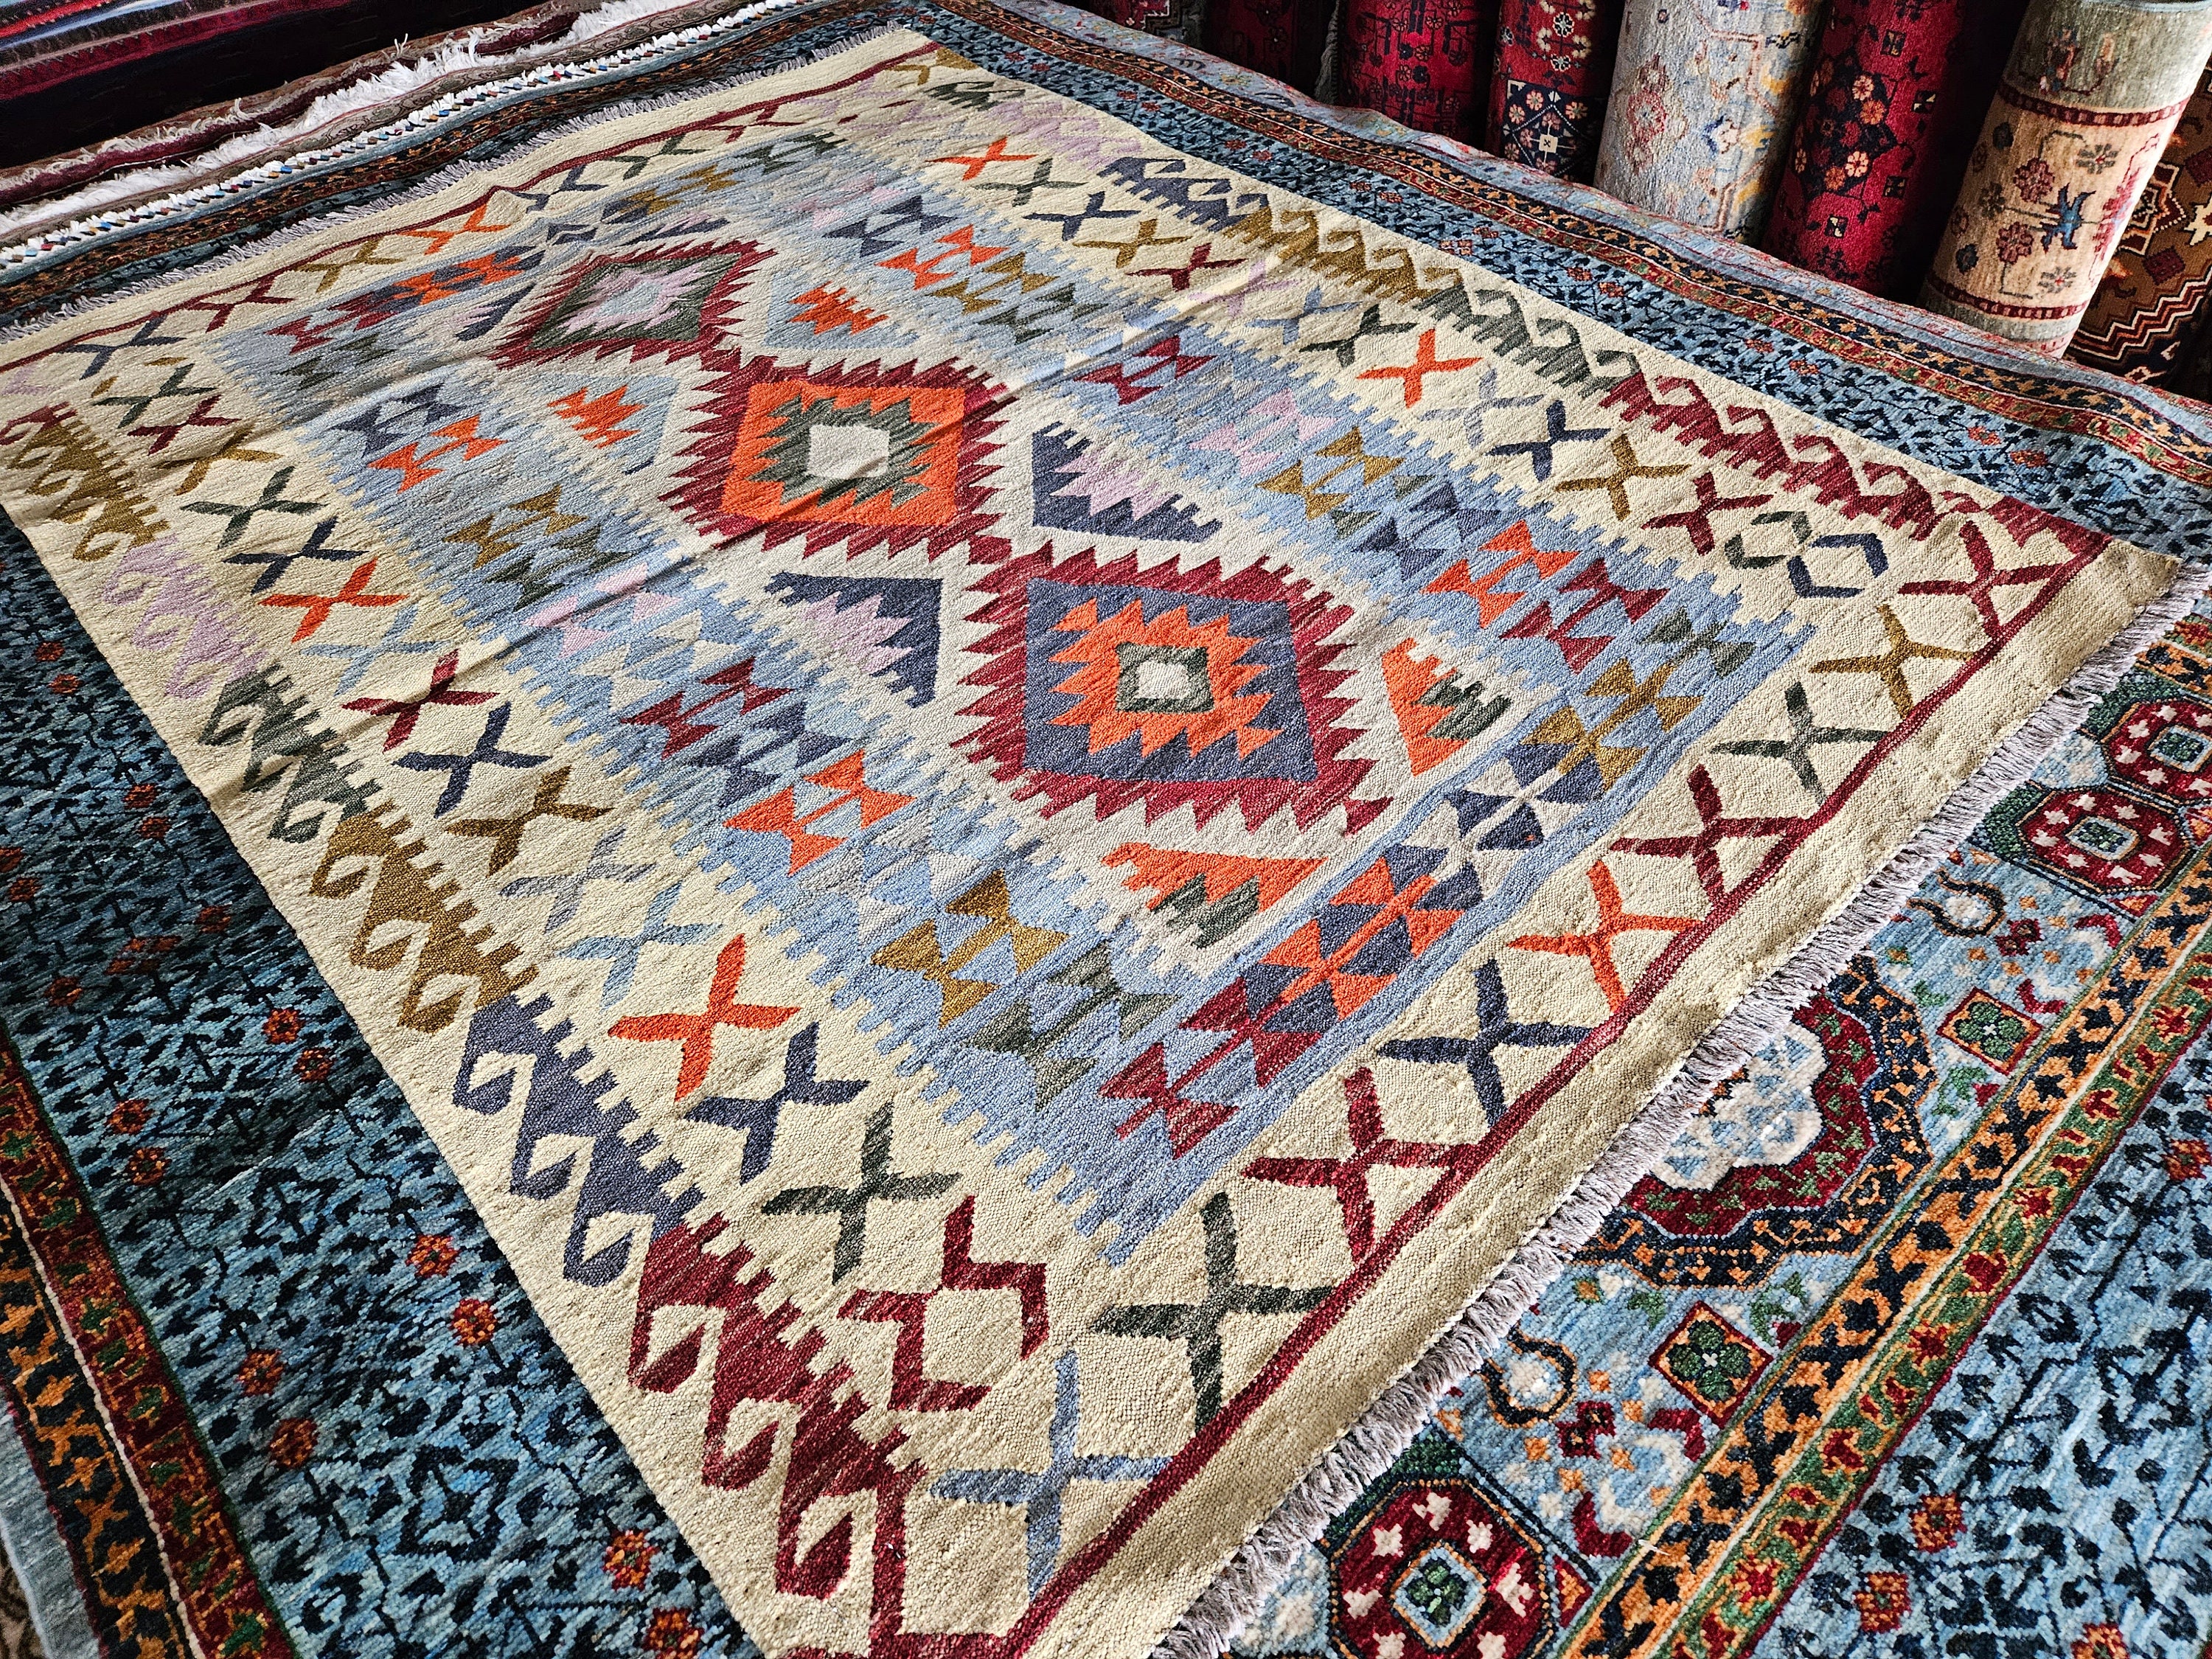 4x6 Feet Afghan Handmade Kilim Rug with 100% Wool